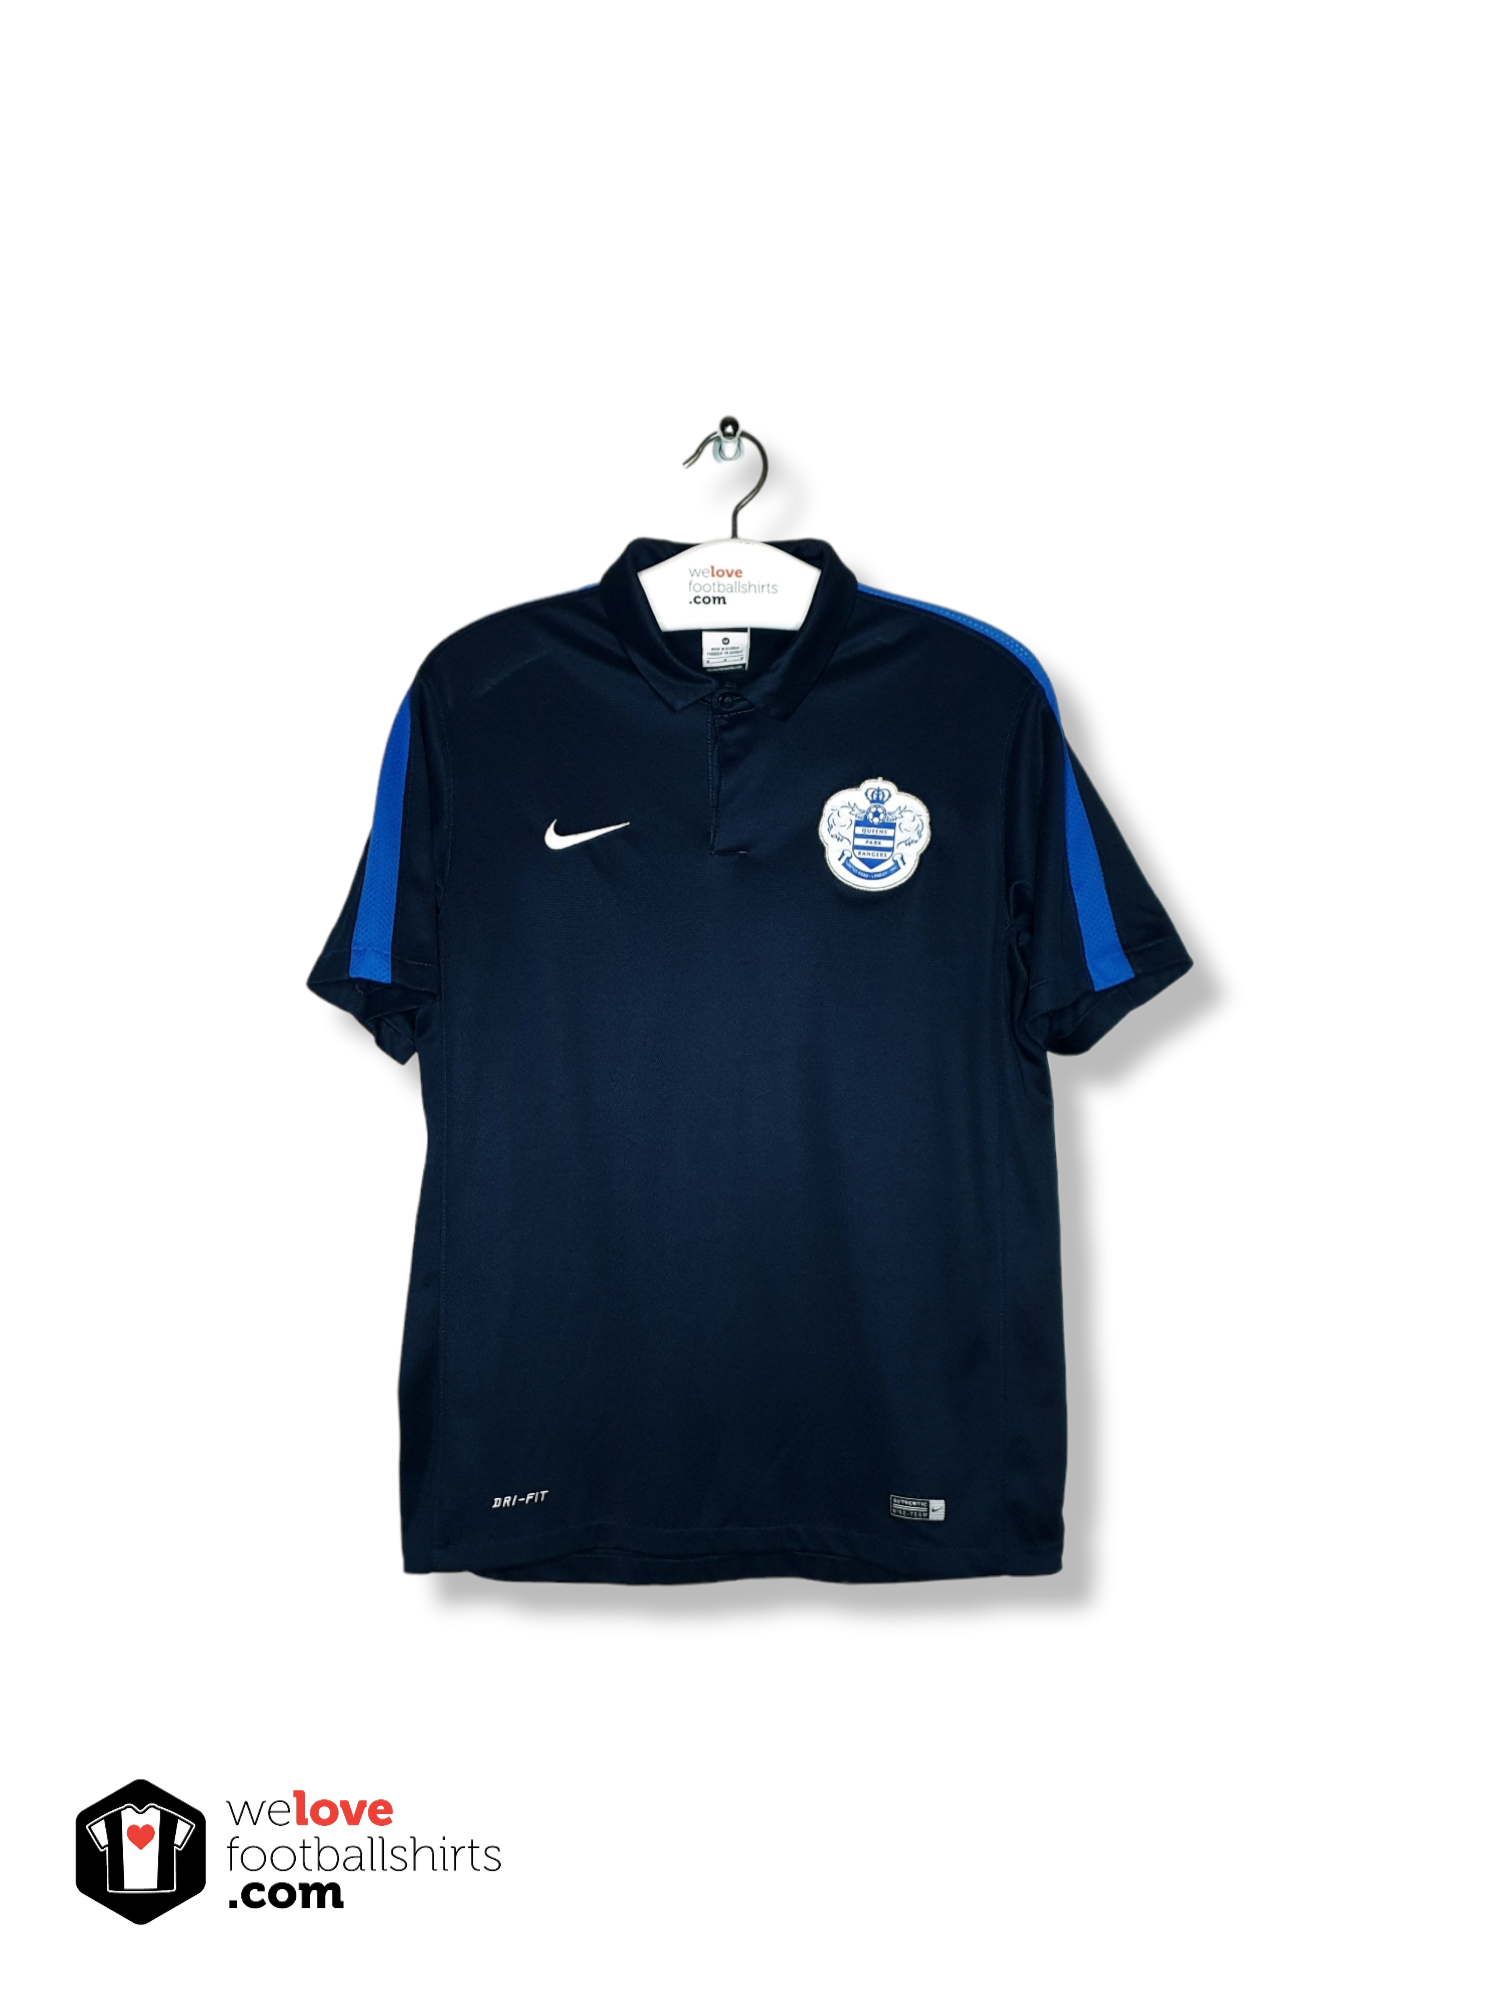 Nike training shirt Queens Park Rangers FC 2014/15